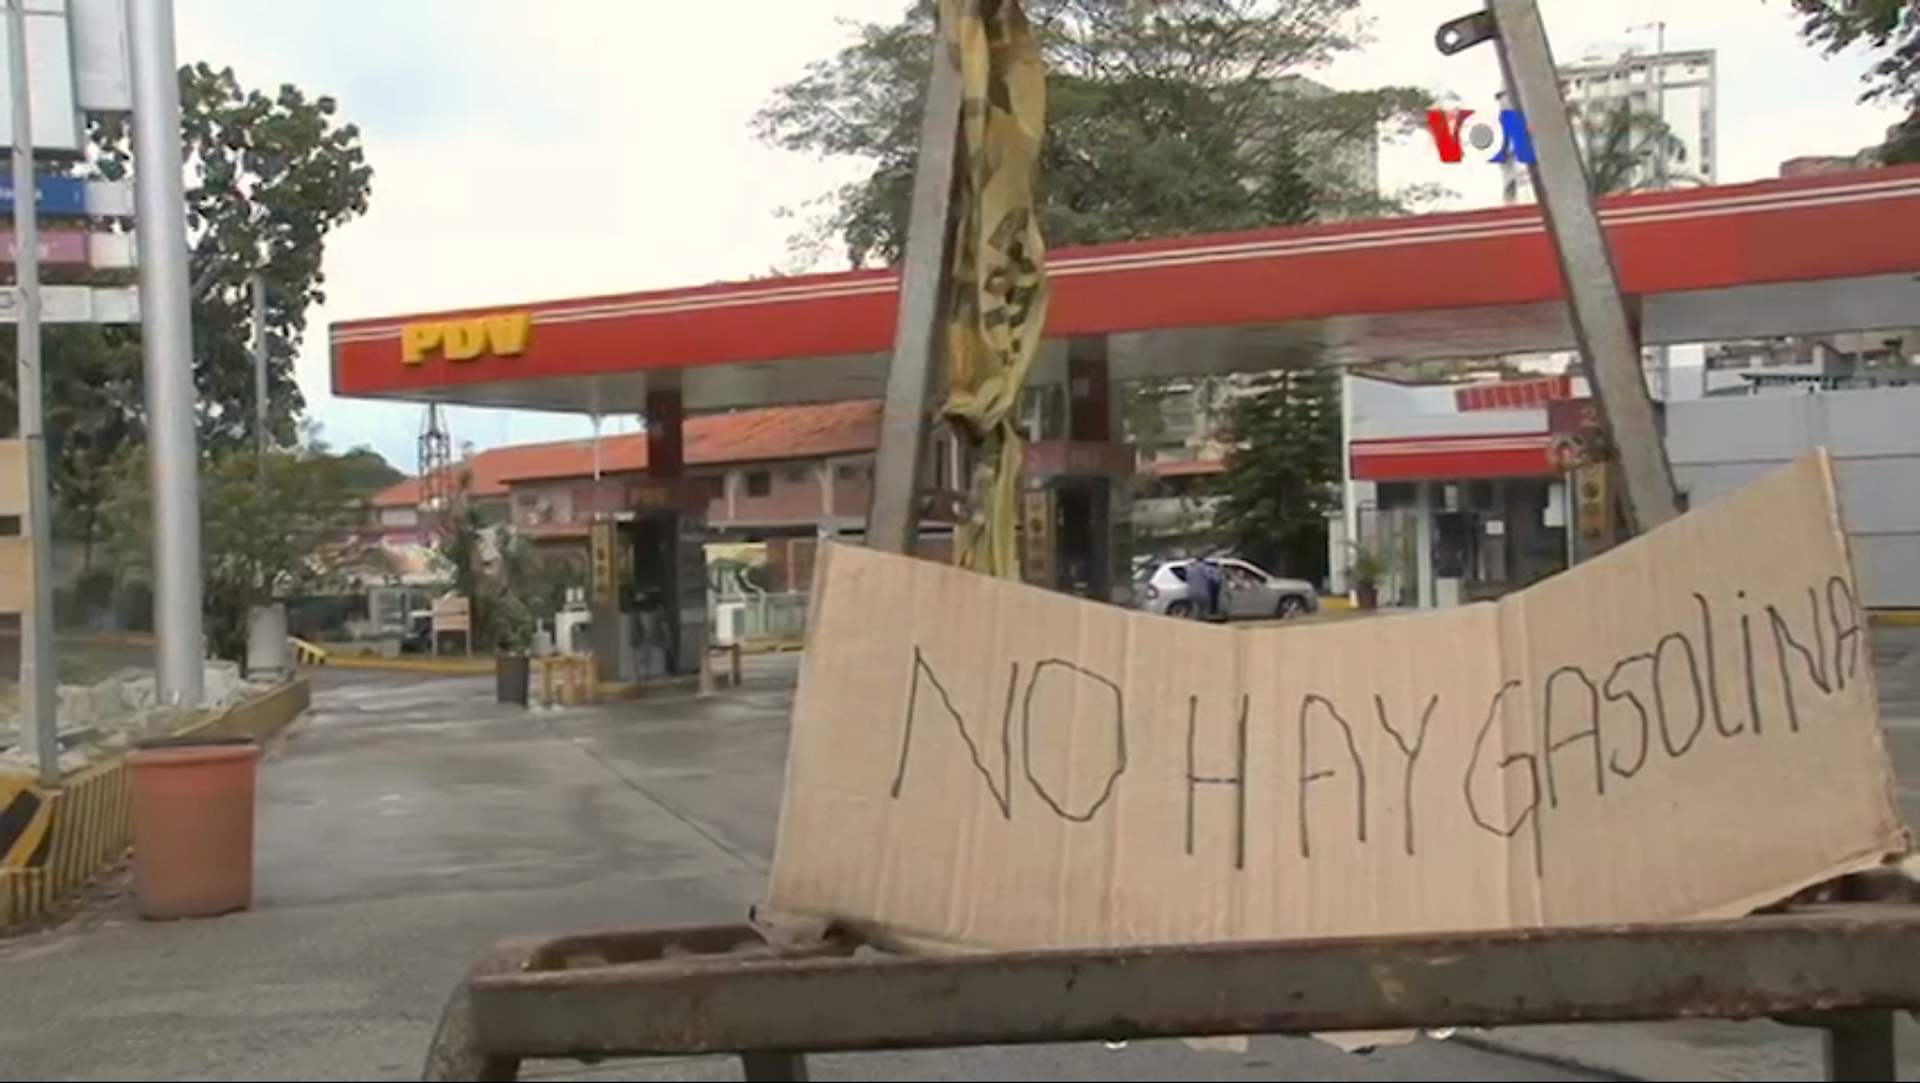 Venezuela oil crisis